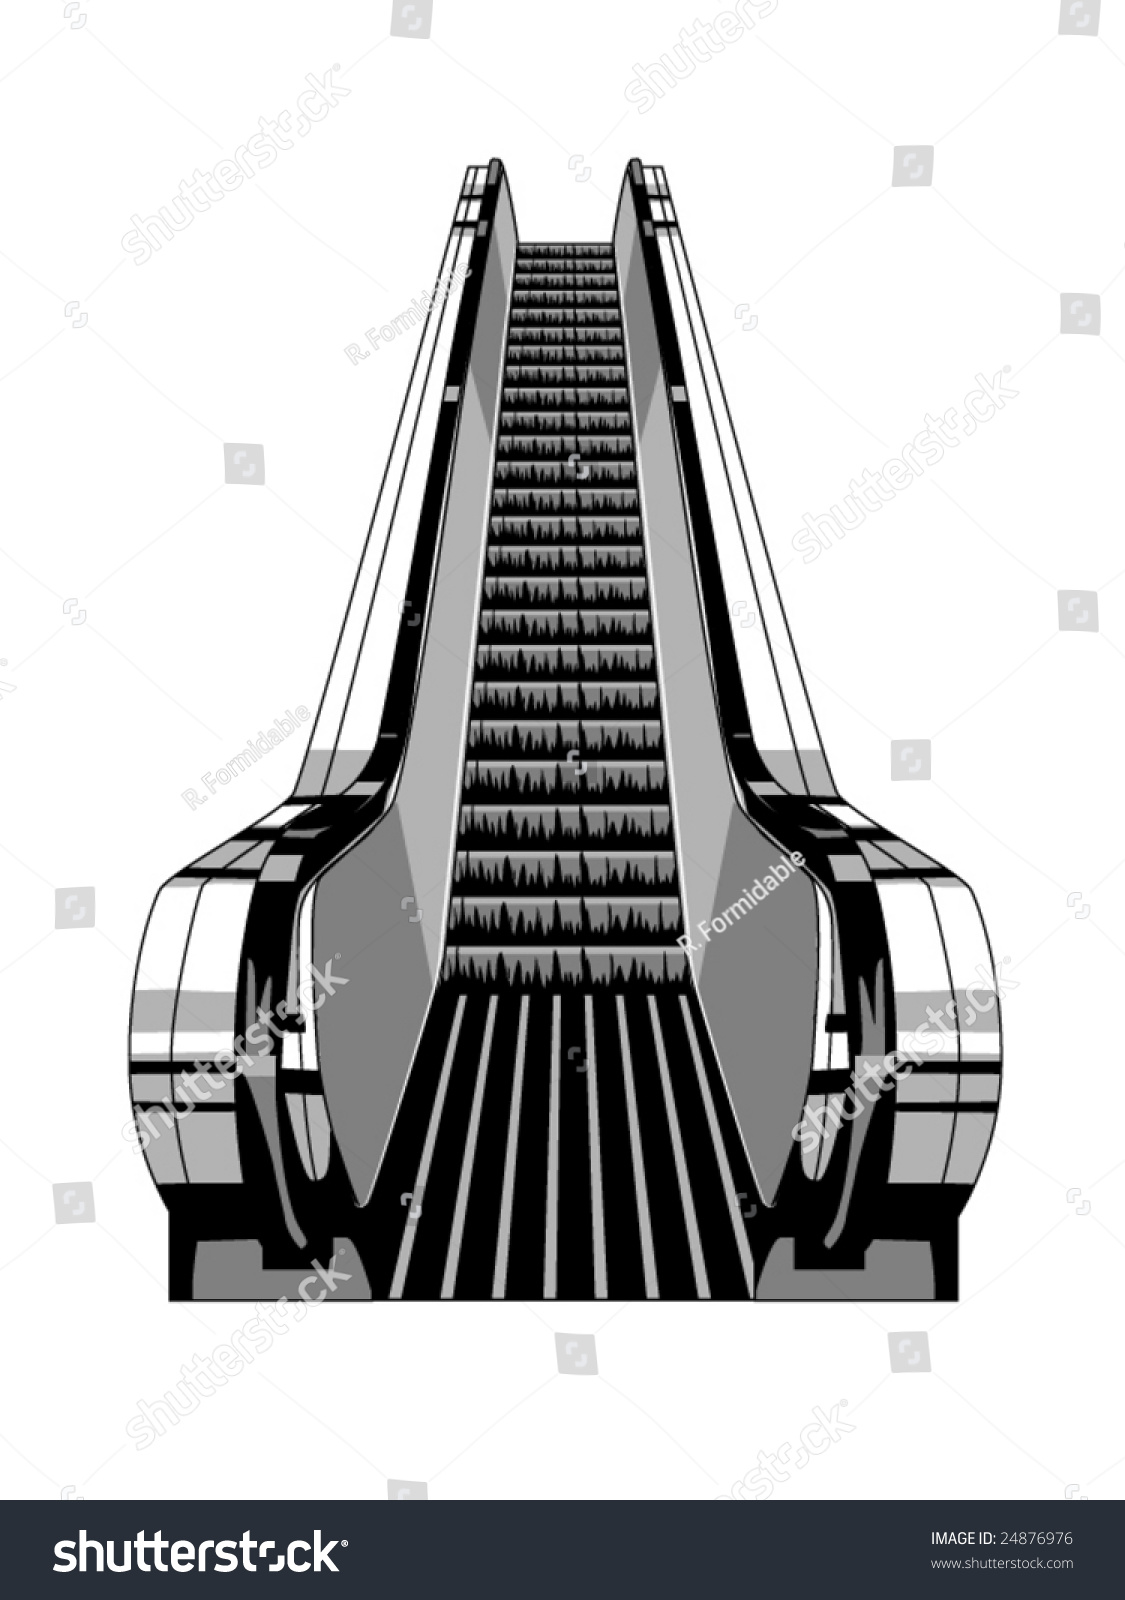 clipart escalator - photo #39